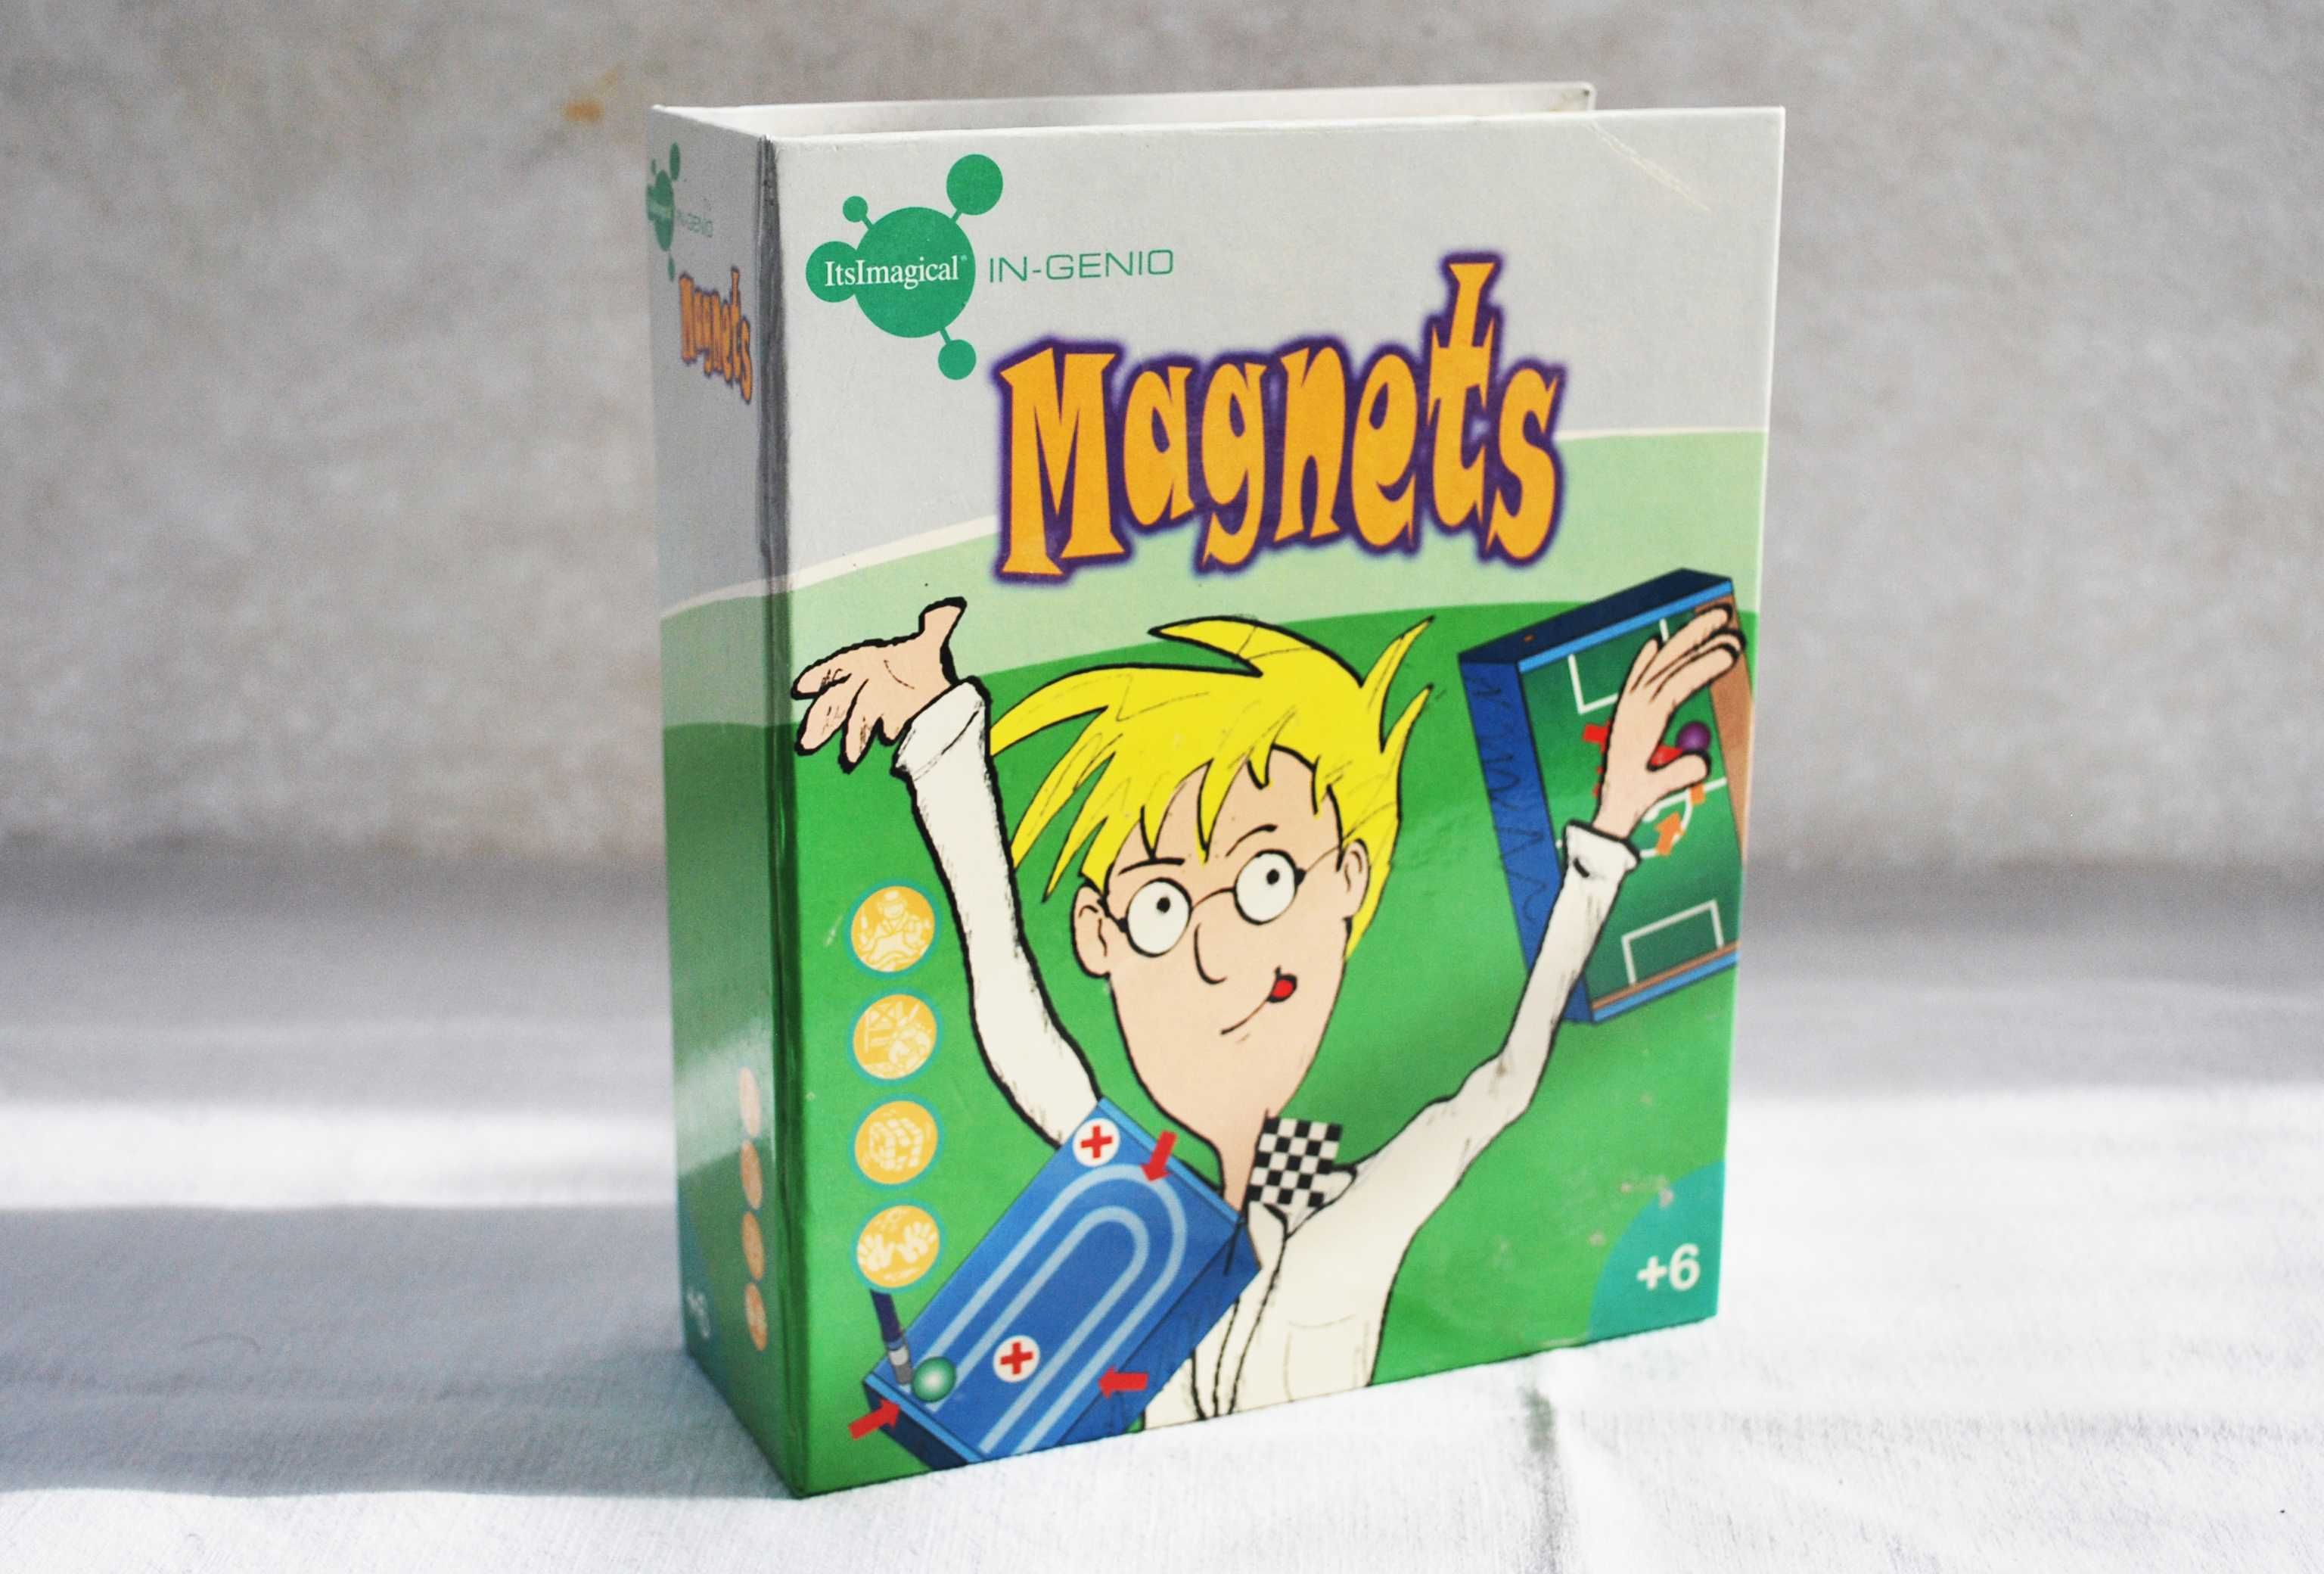 Magnets - Jogo de ímanes